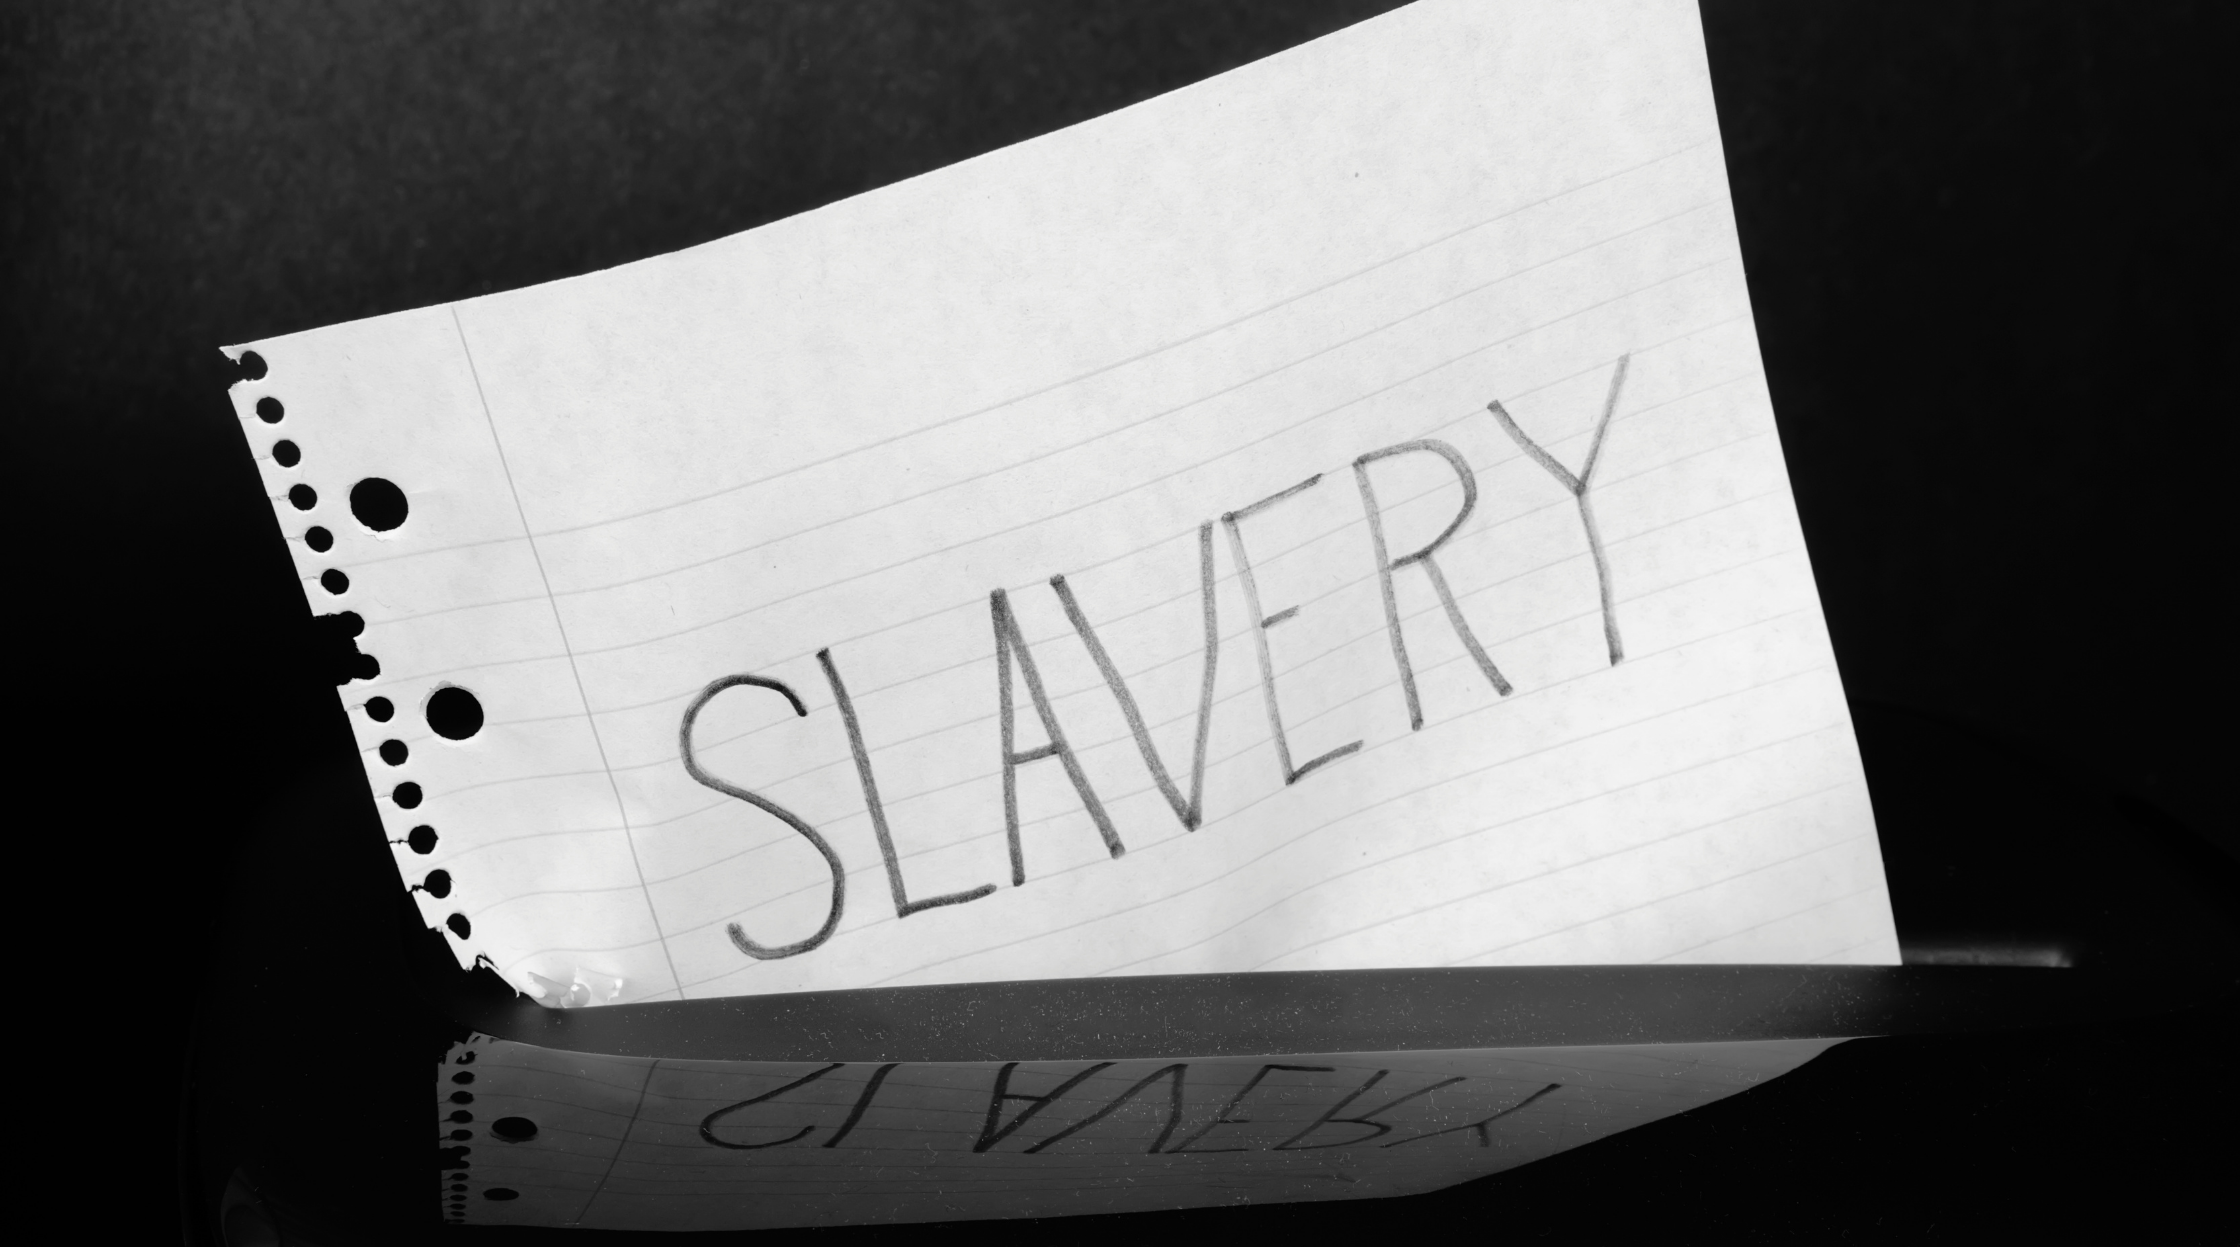 Anti-slavery statement